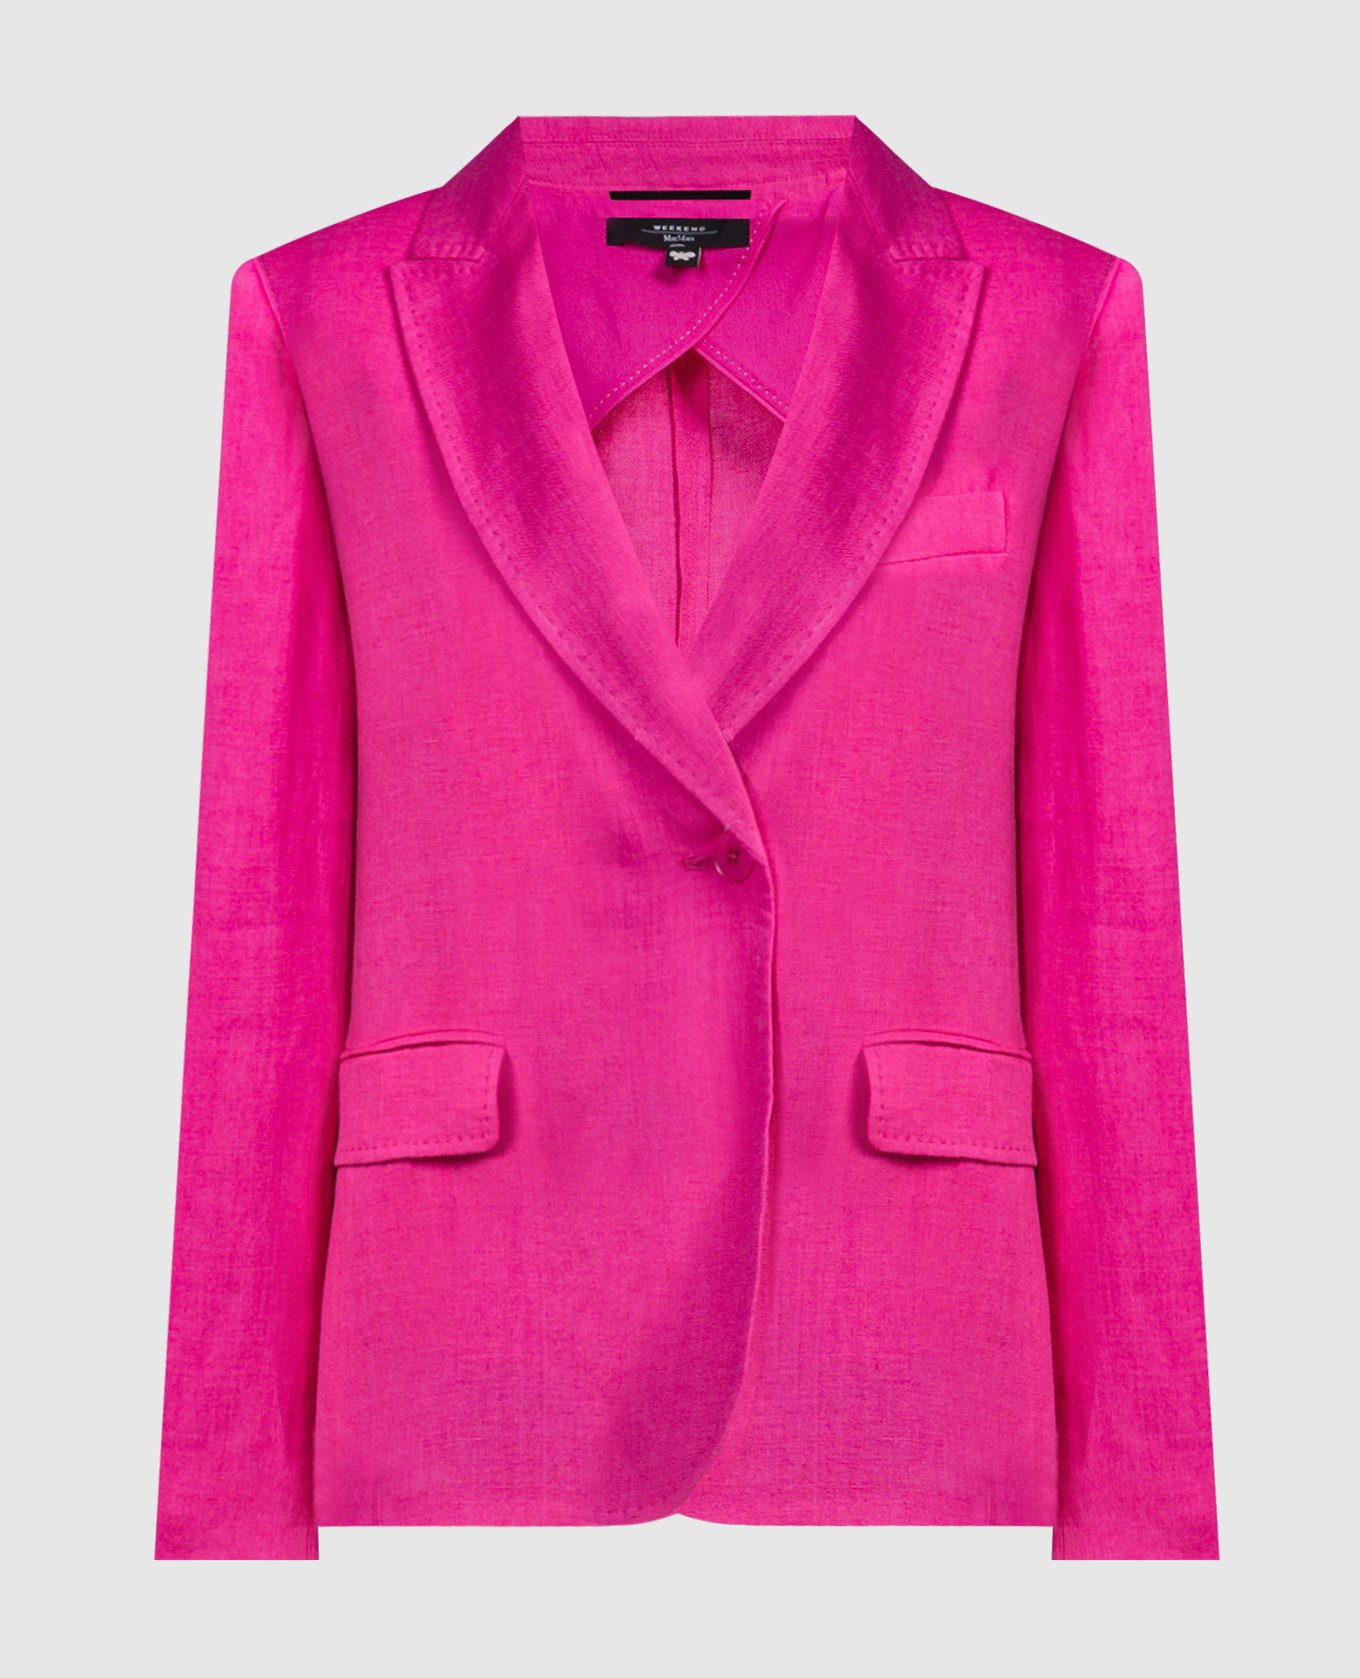 NALUT pink linen jacket